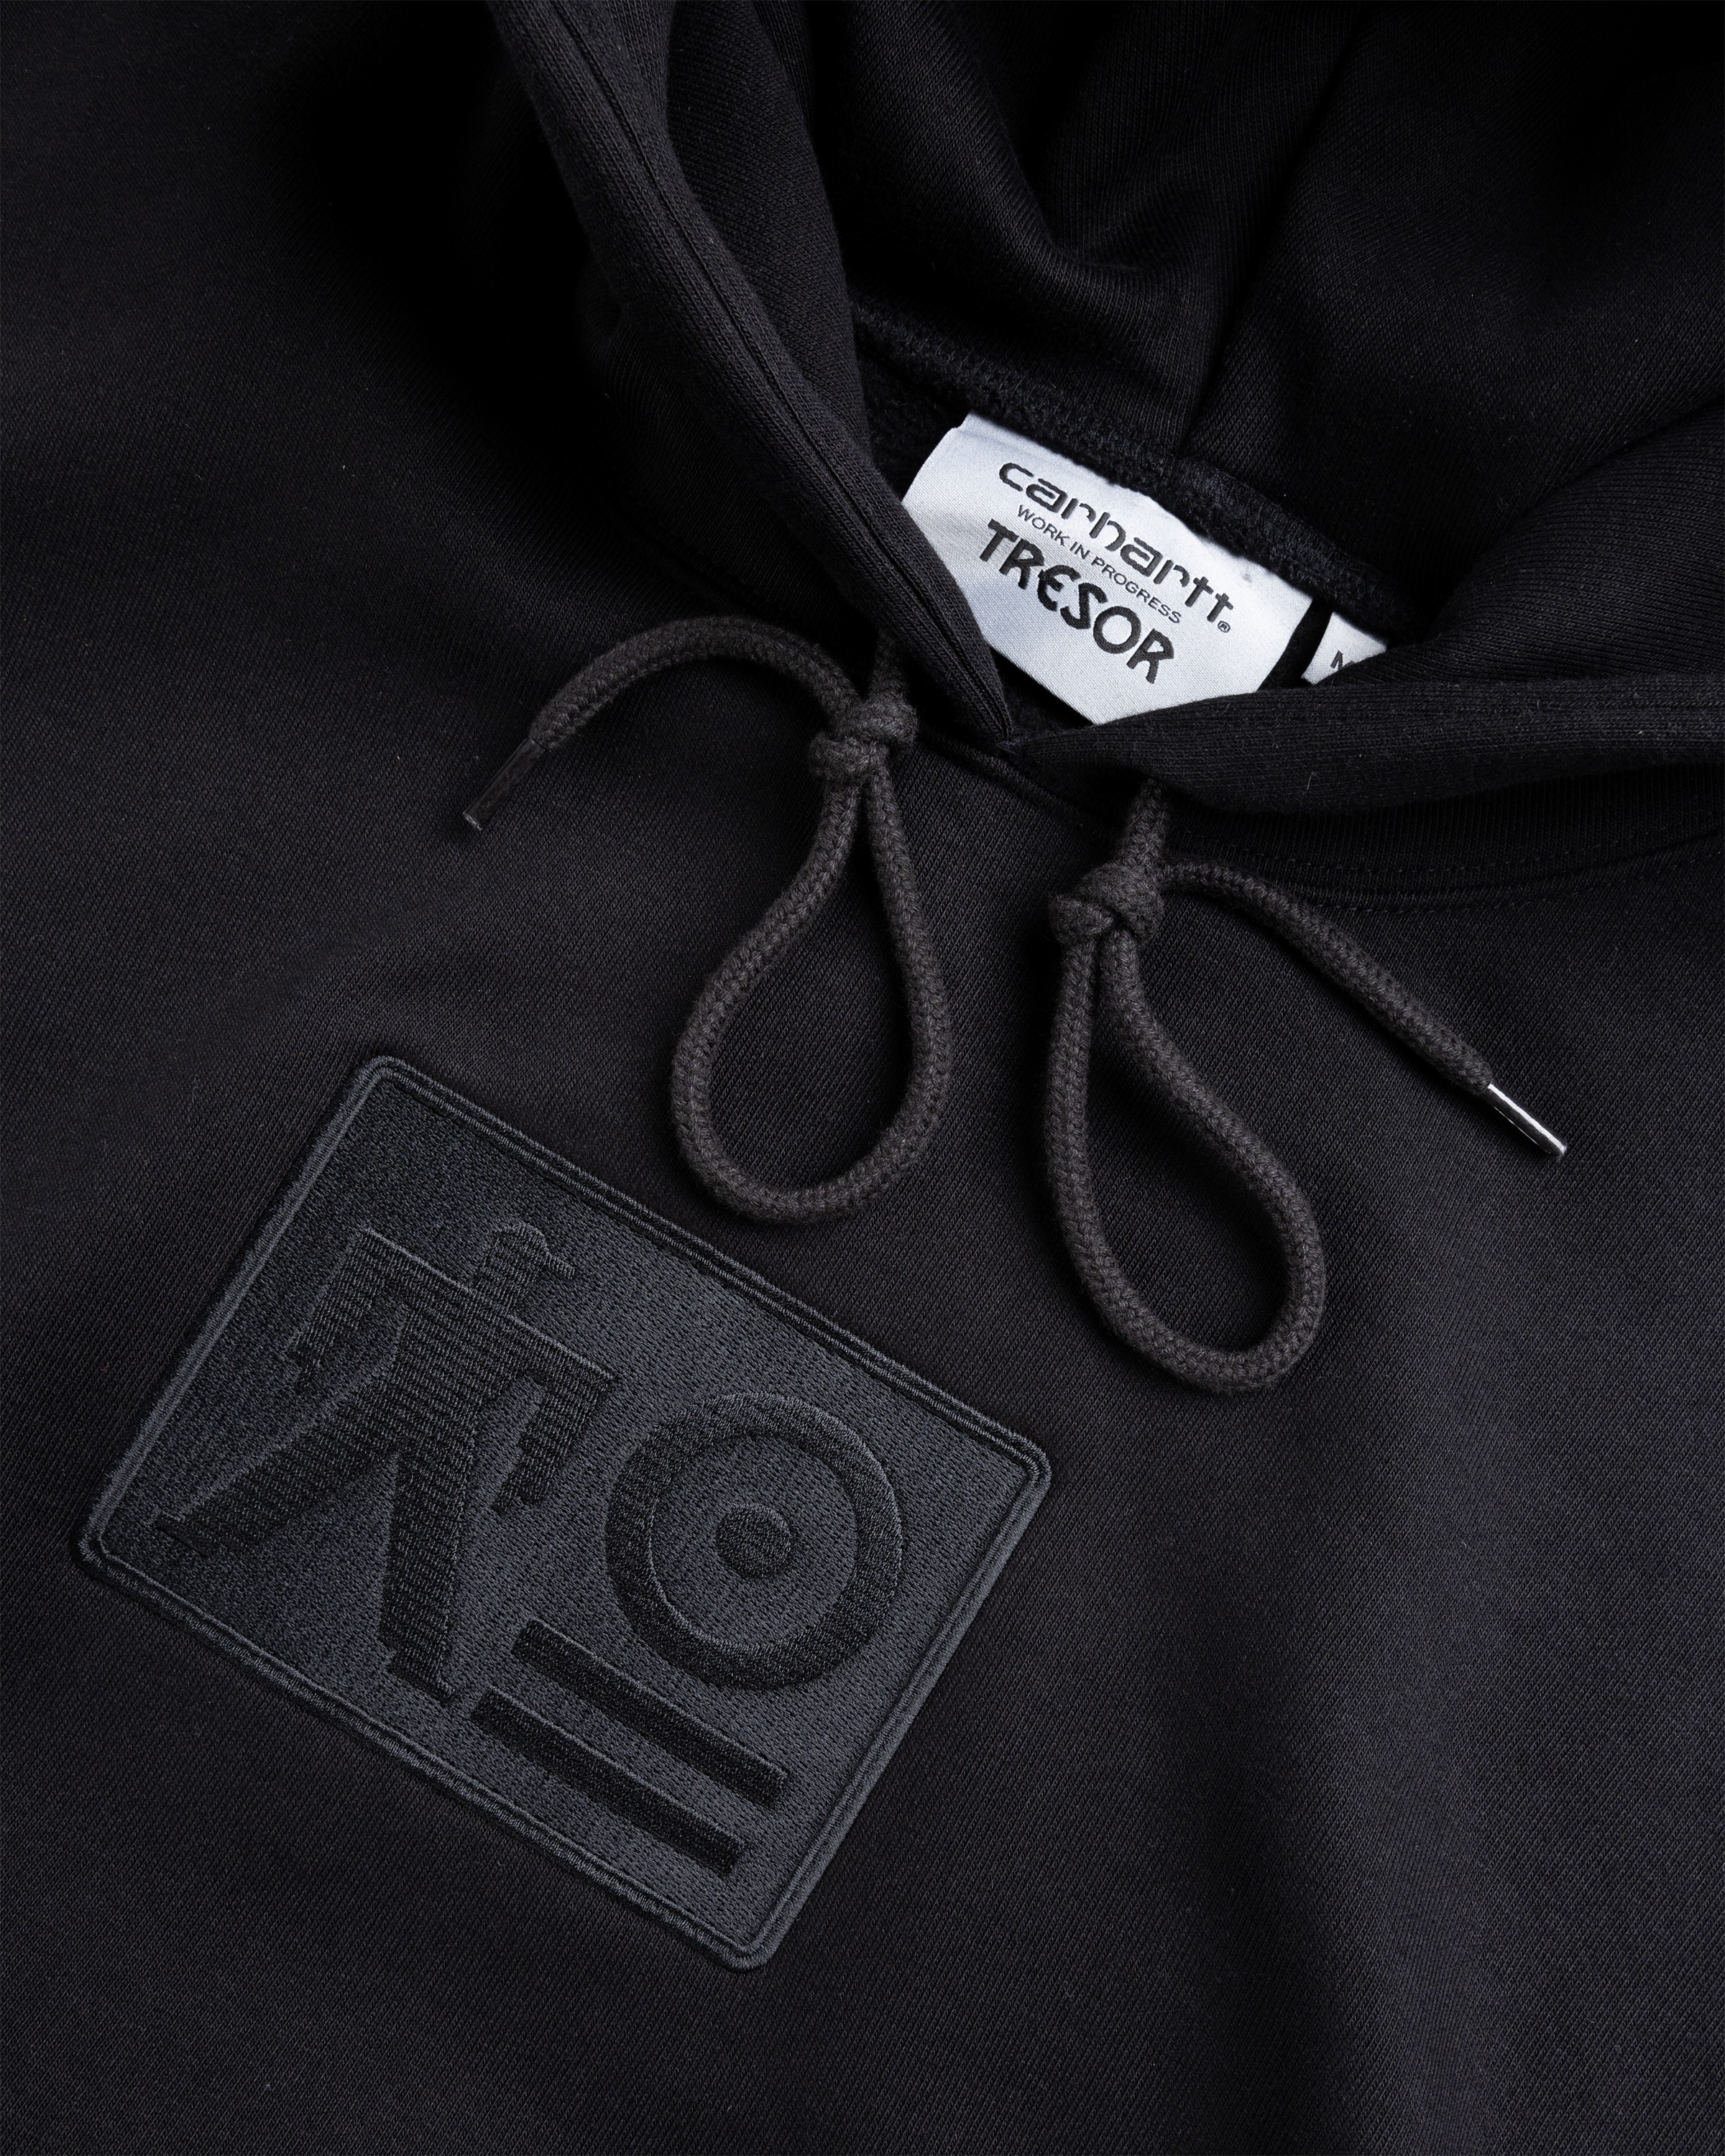 Carhartt WIP x Tresor – Basement Hooded Sweatshirt Black/Grey - Sweats - Black - Image 6